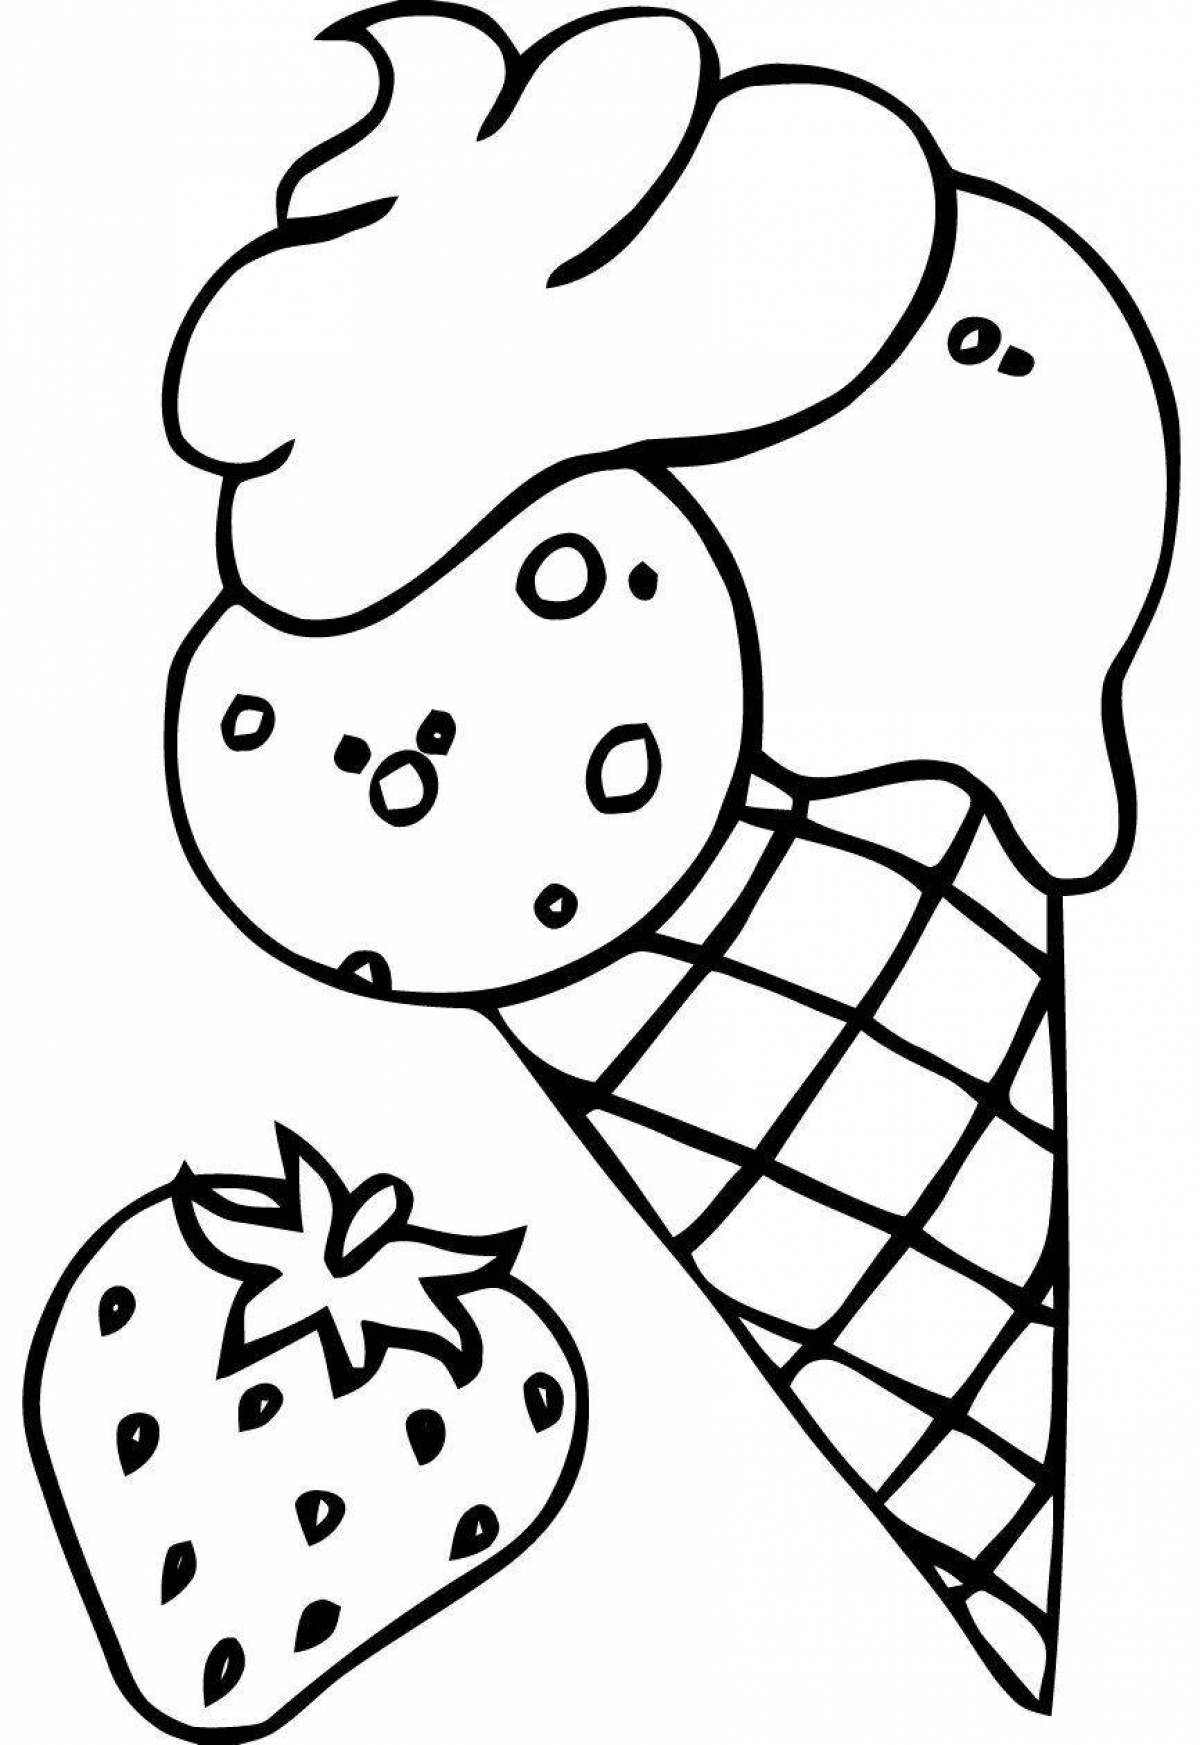 Сказочная страница раскраски мороженого для младенцев